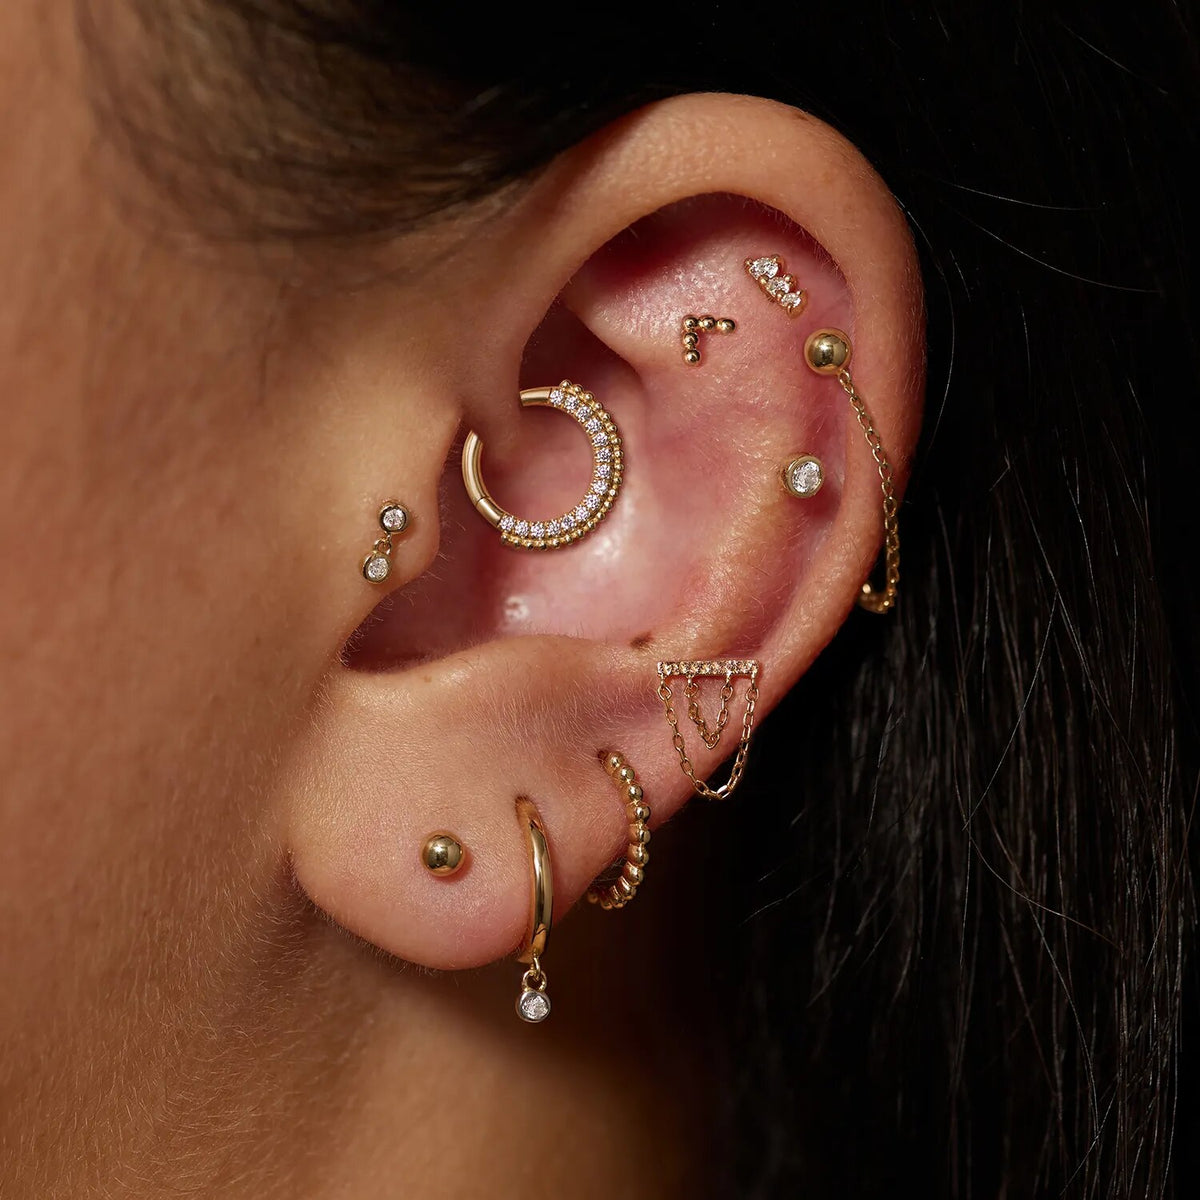 14K gold helix earring with chains conch earrings earlobe piercing jewelry labret stud